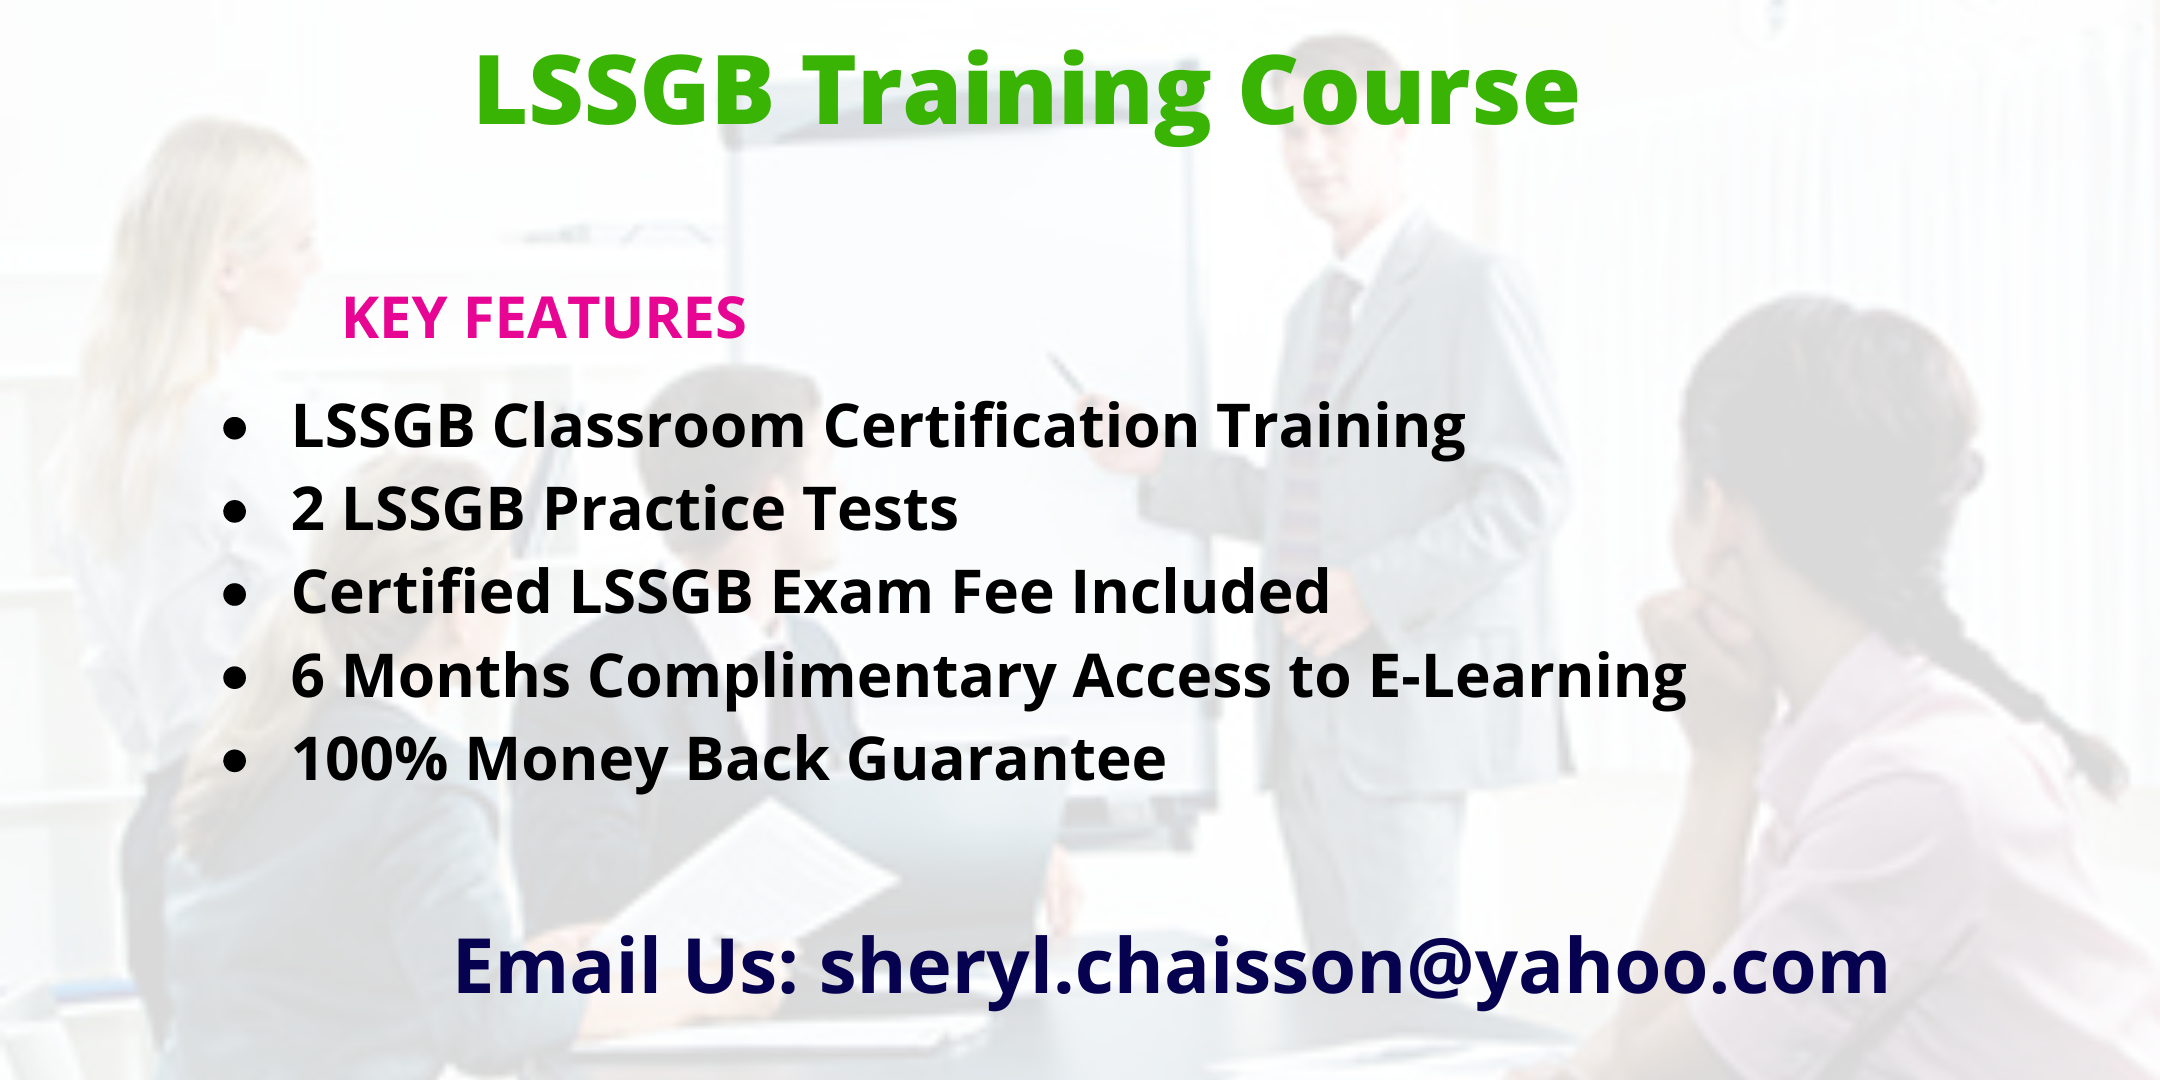 Lean Six Sigma Green Belt Certification Training in Santa Fe, NM